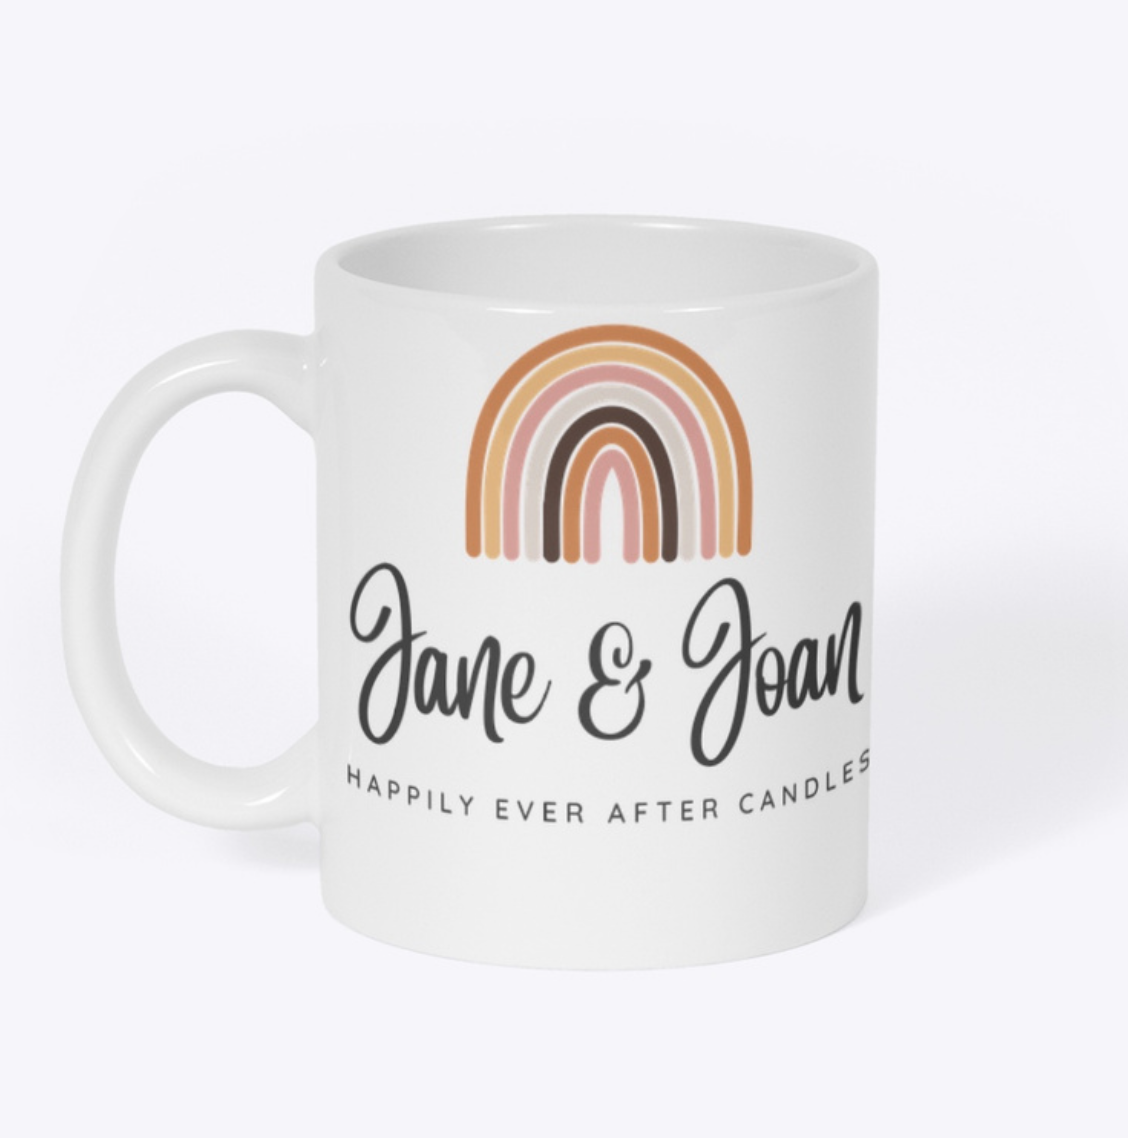 Jane & Joan Premade Logo